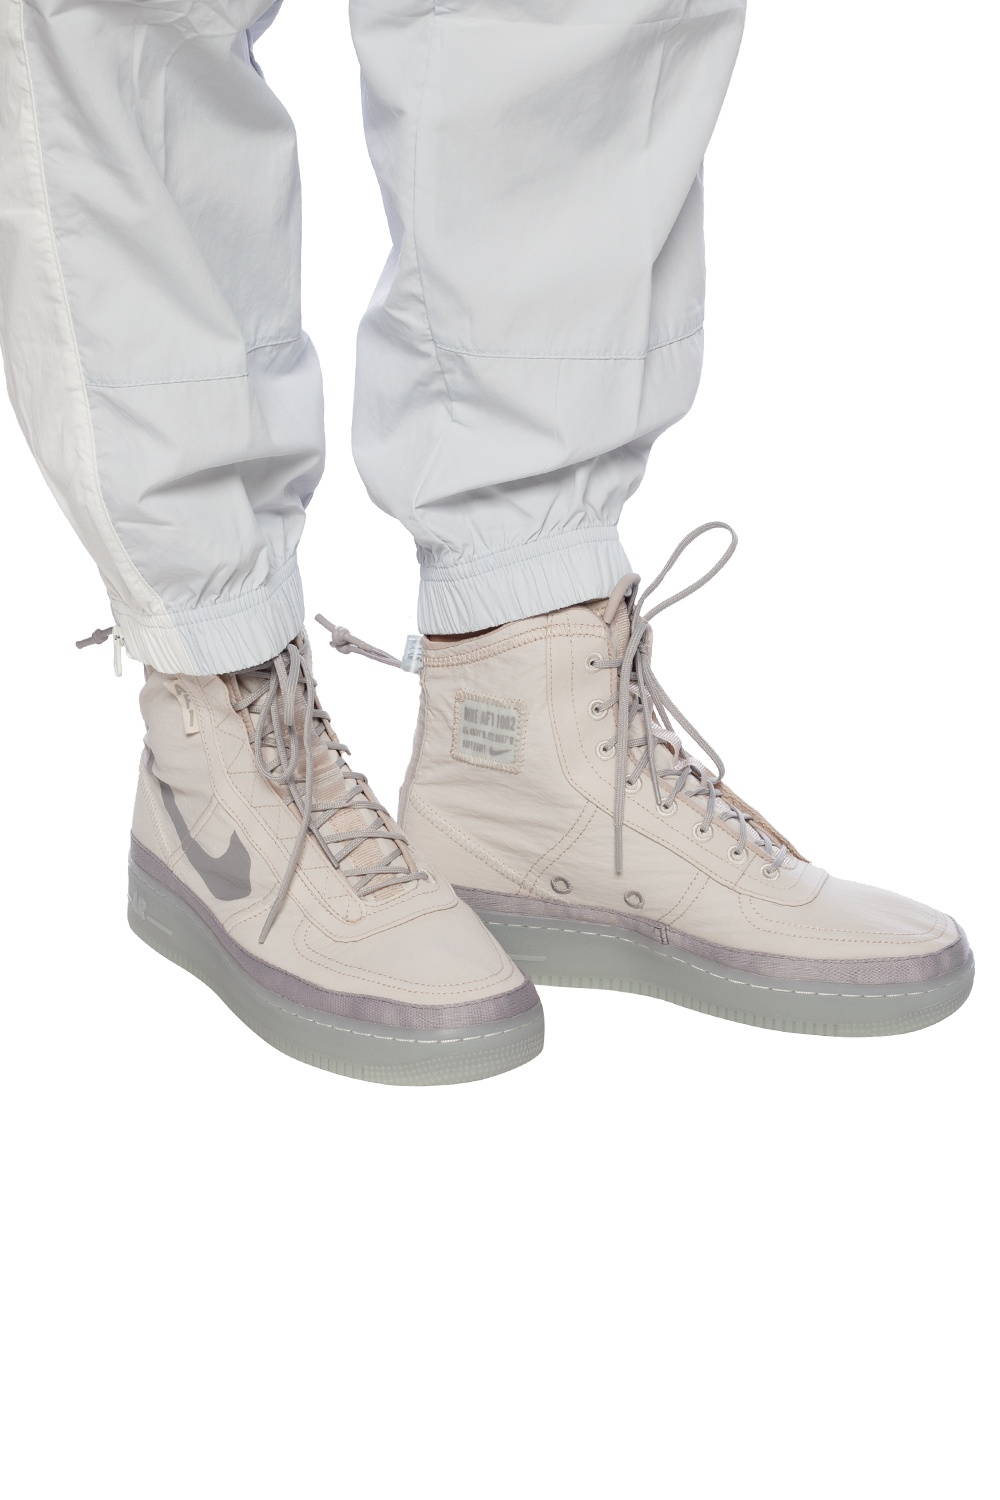 Cream 'Air Force 1 Shell' sneakers Nike - Vitkac Canada